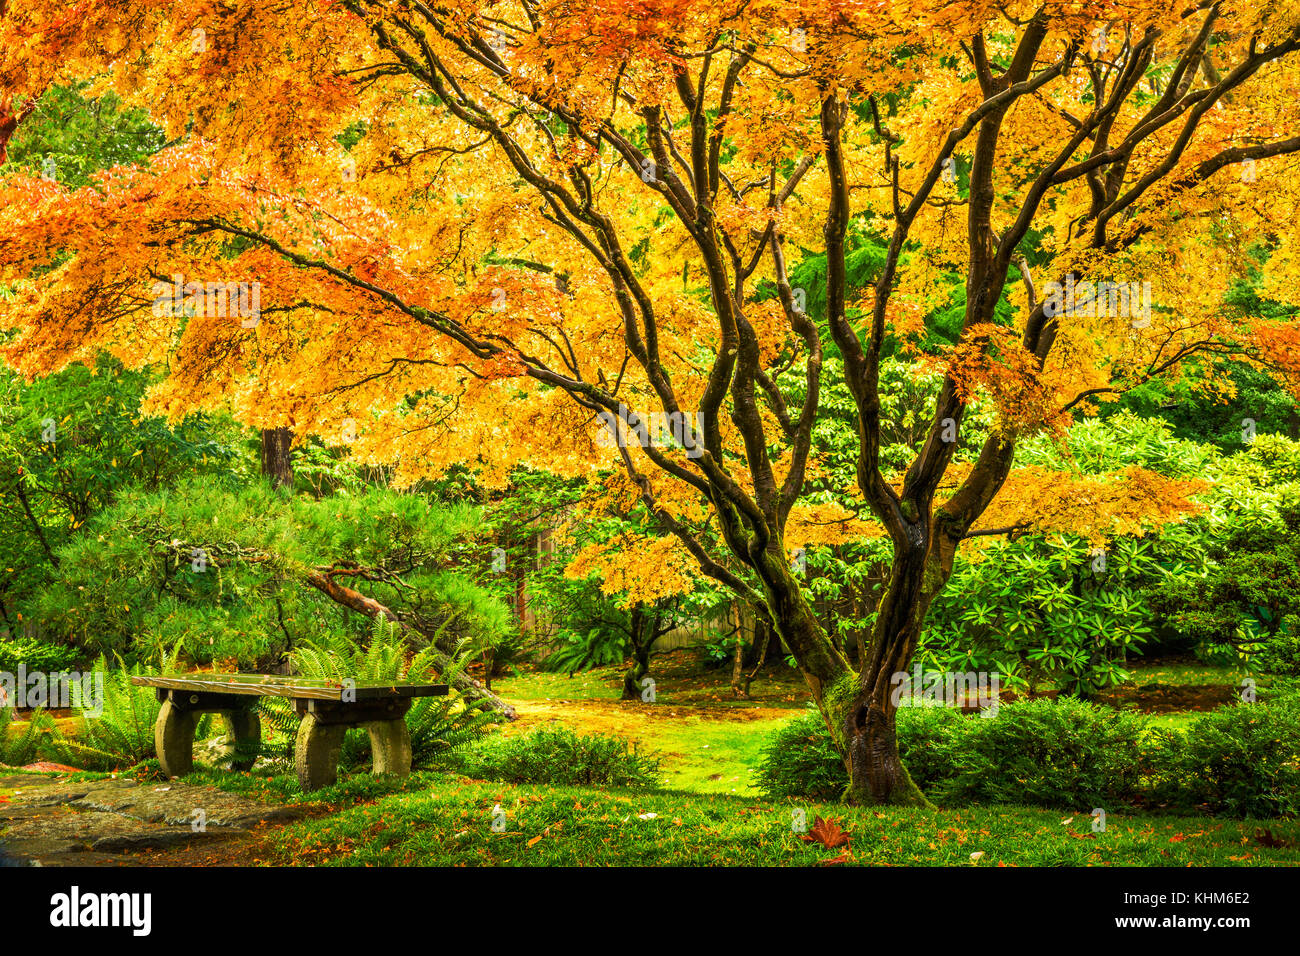 Japanese maple tree with golden fall foliage next to an empty bench in Seattle's Washington Park Arboretum Botanical Garden Stock Photo